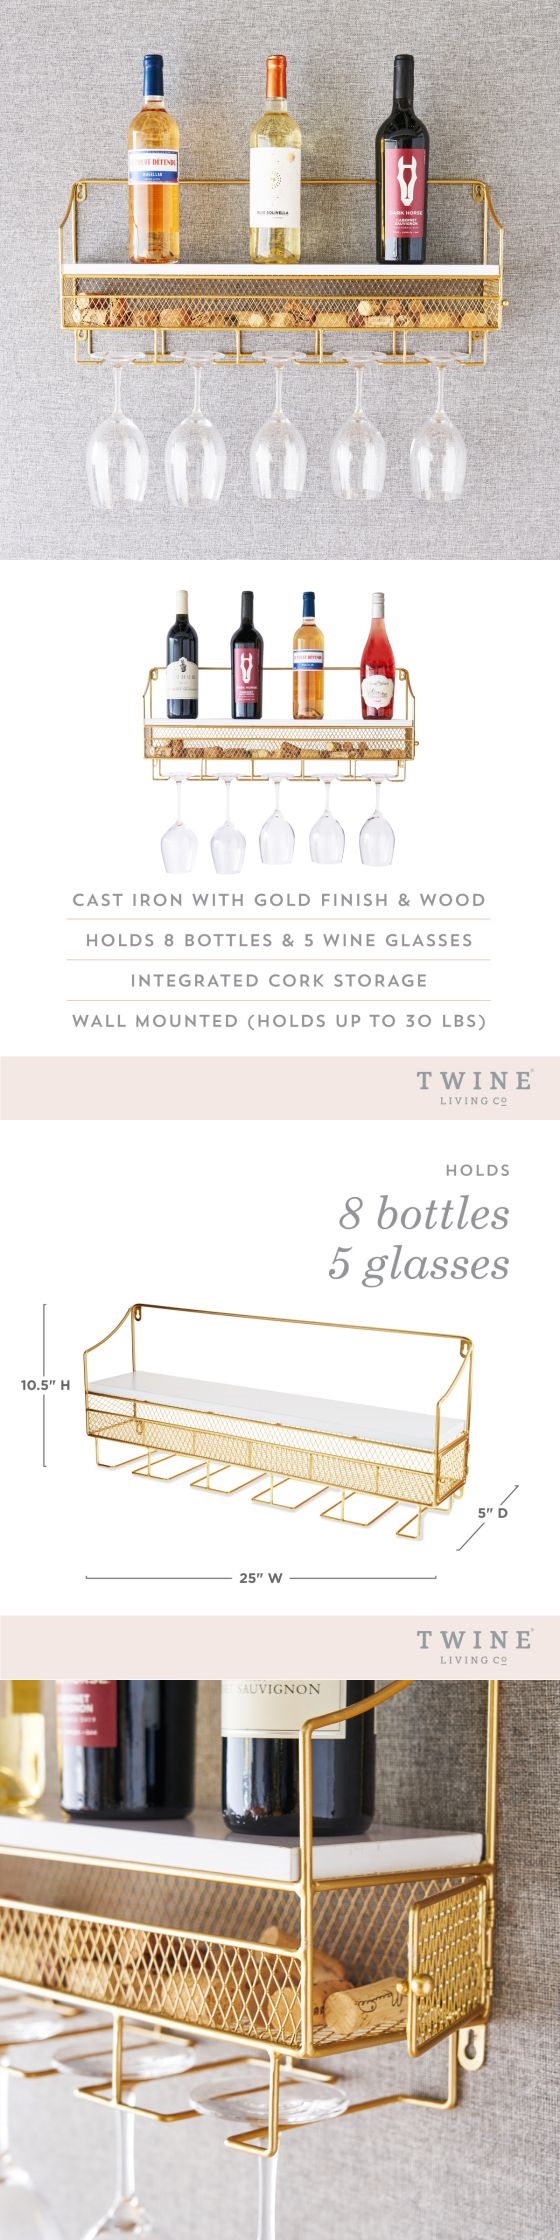 Gold-Finish Cast-Iron Wall-Mounted Wine Rack & Cork Storage by Twine